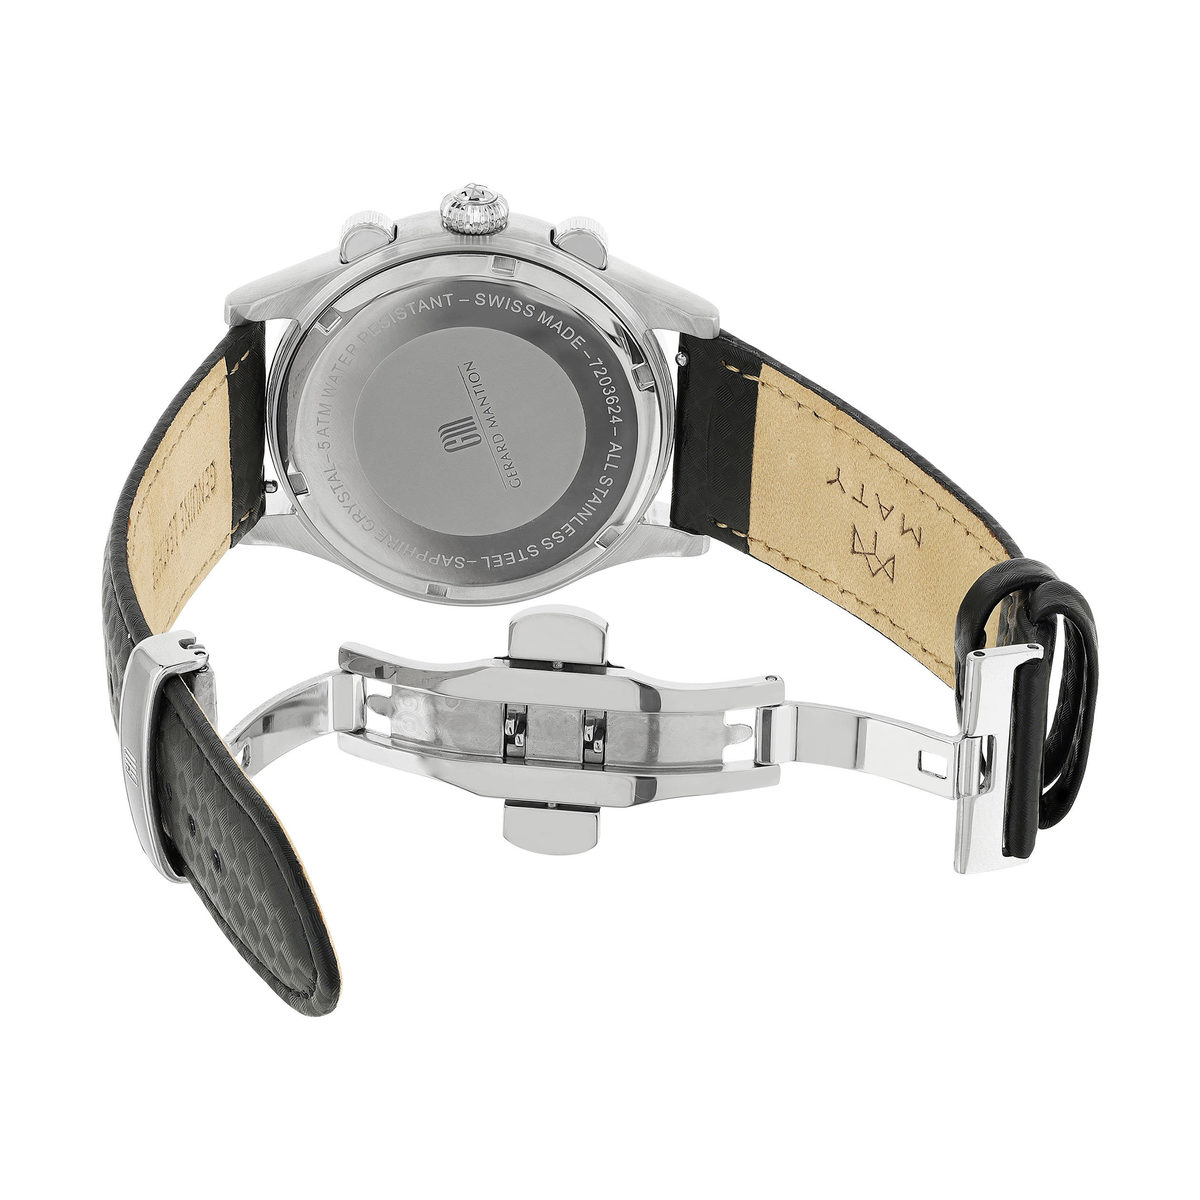 Montre MATY GM chronographe cadran taupe bracelet cuir noir - vue 4